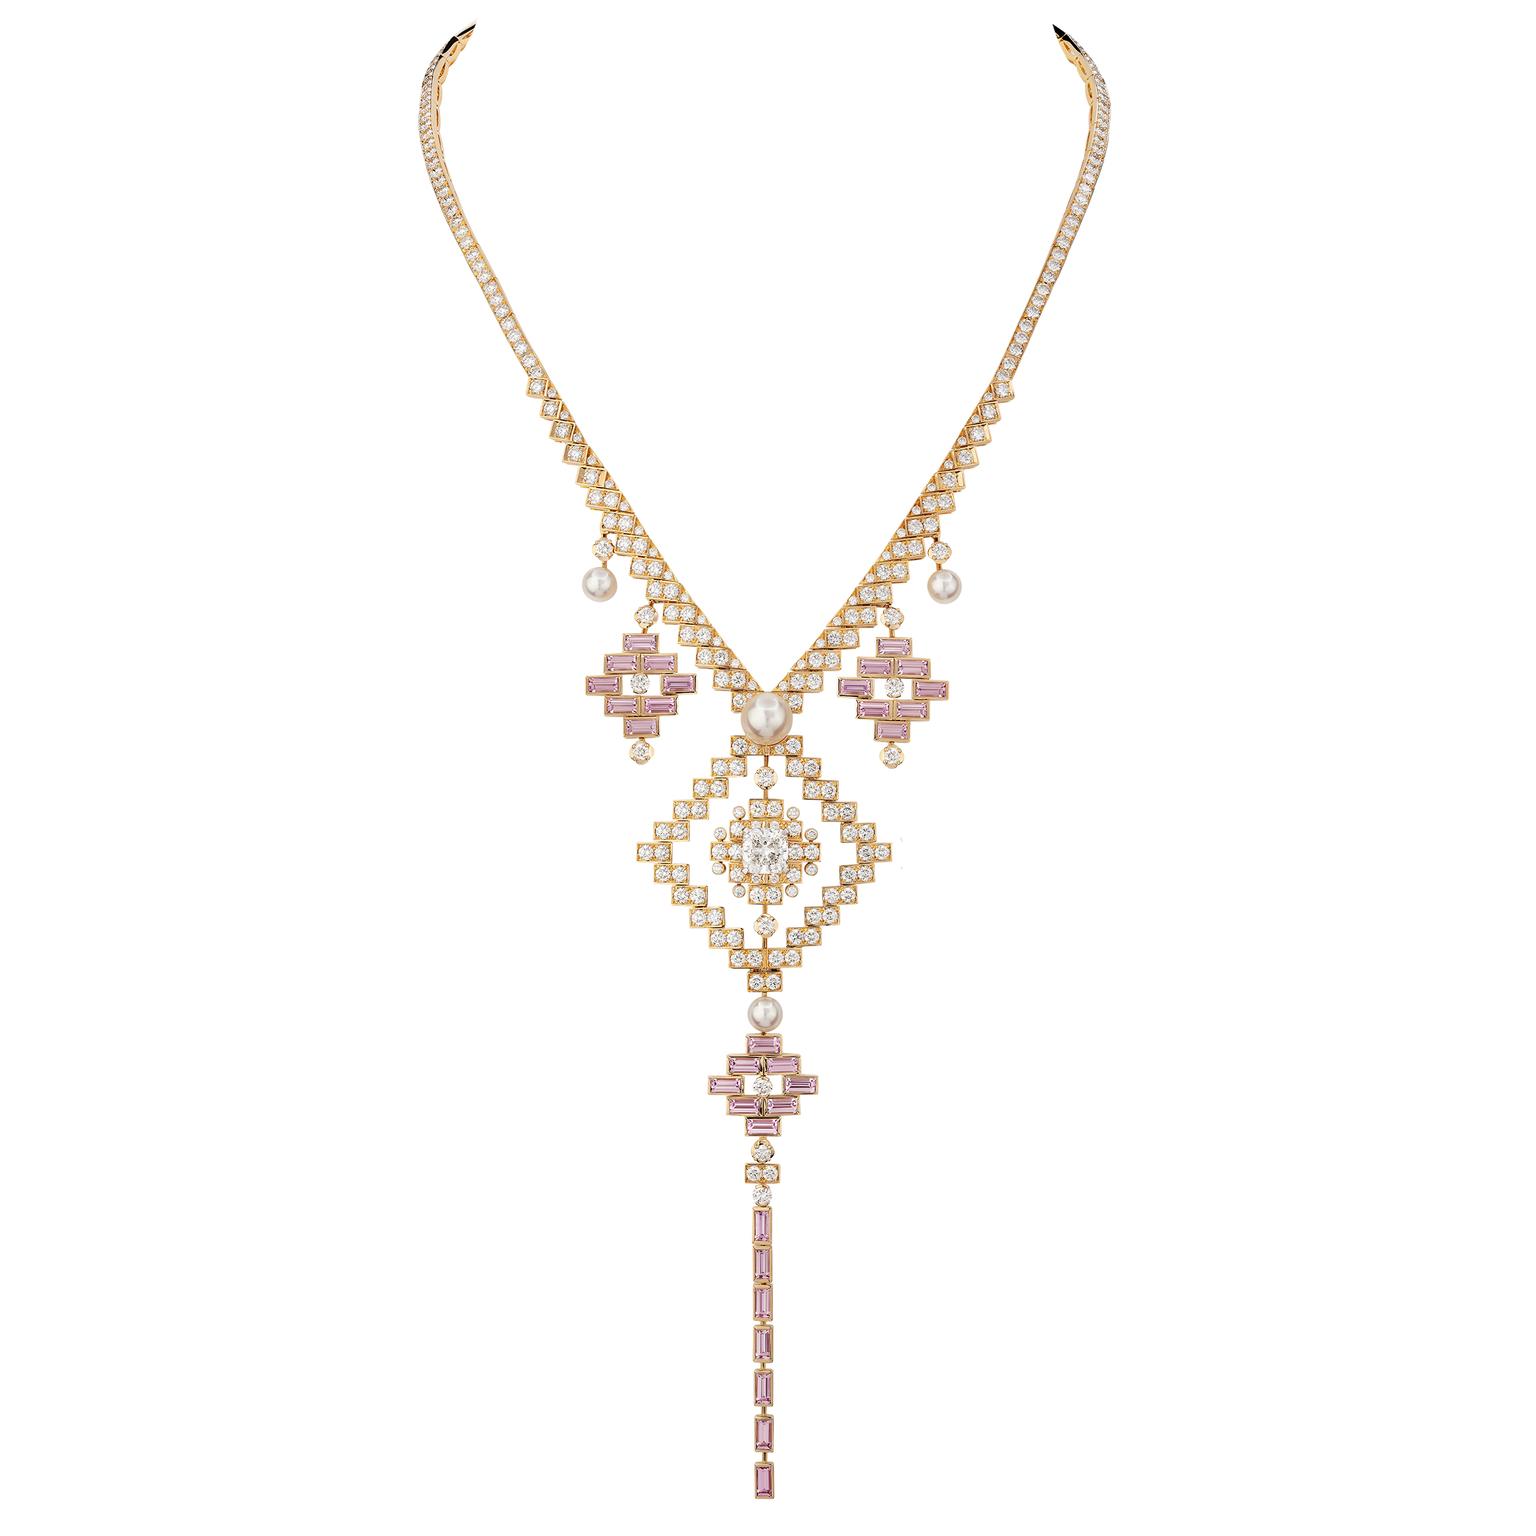 Eblouissante necklace by Chanel